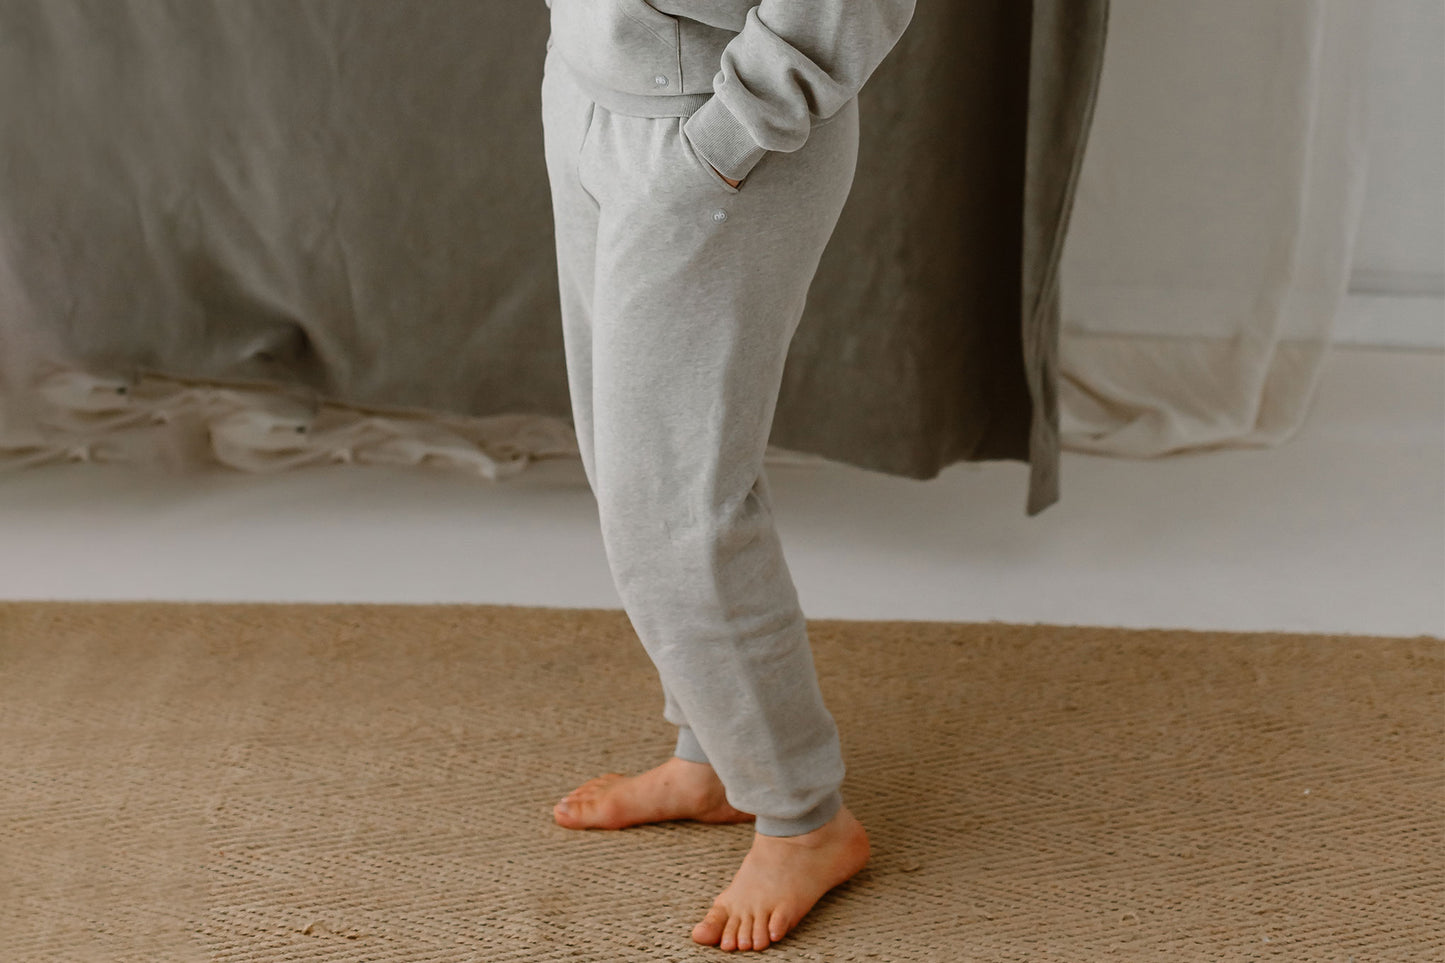 Women's Basics Side Seam Sweatpants (Organic Terry) - Cloudburst